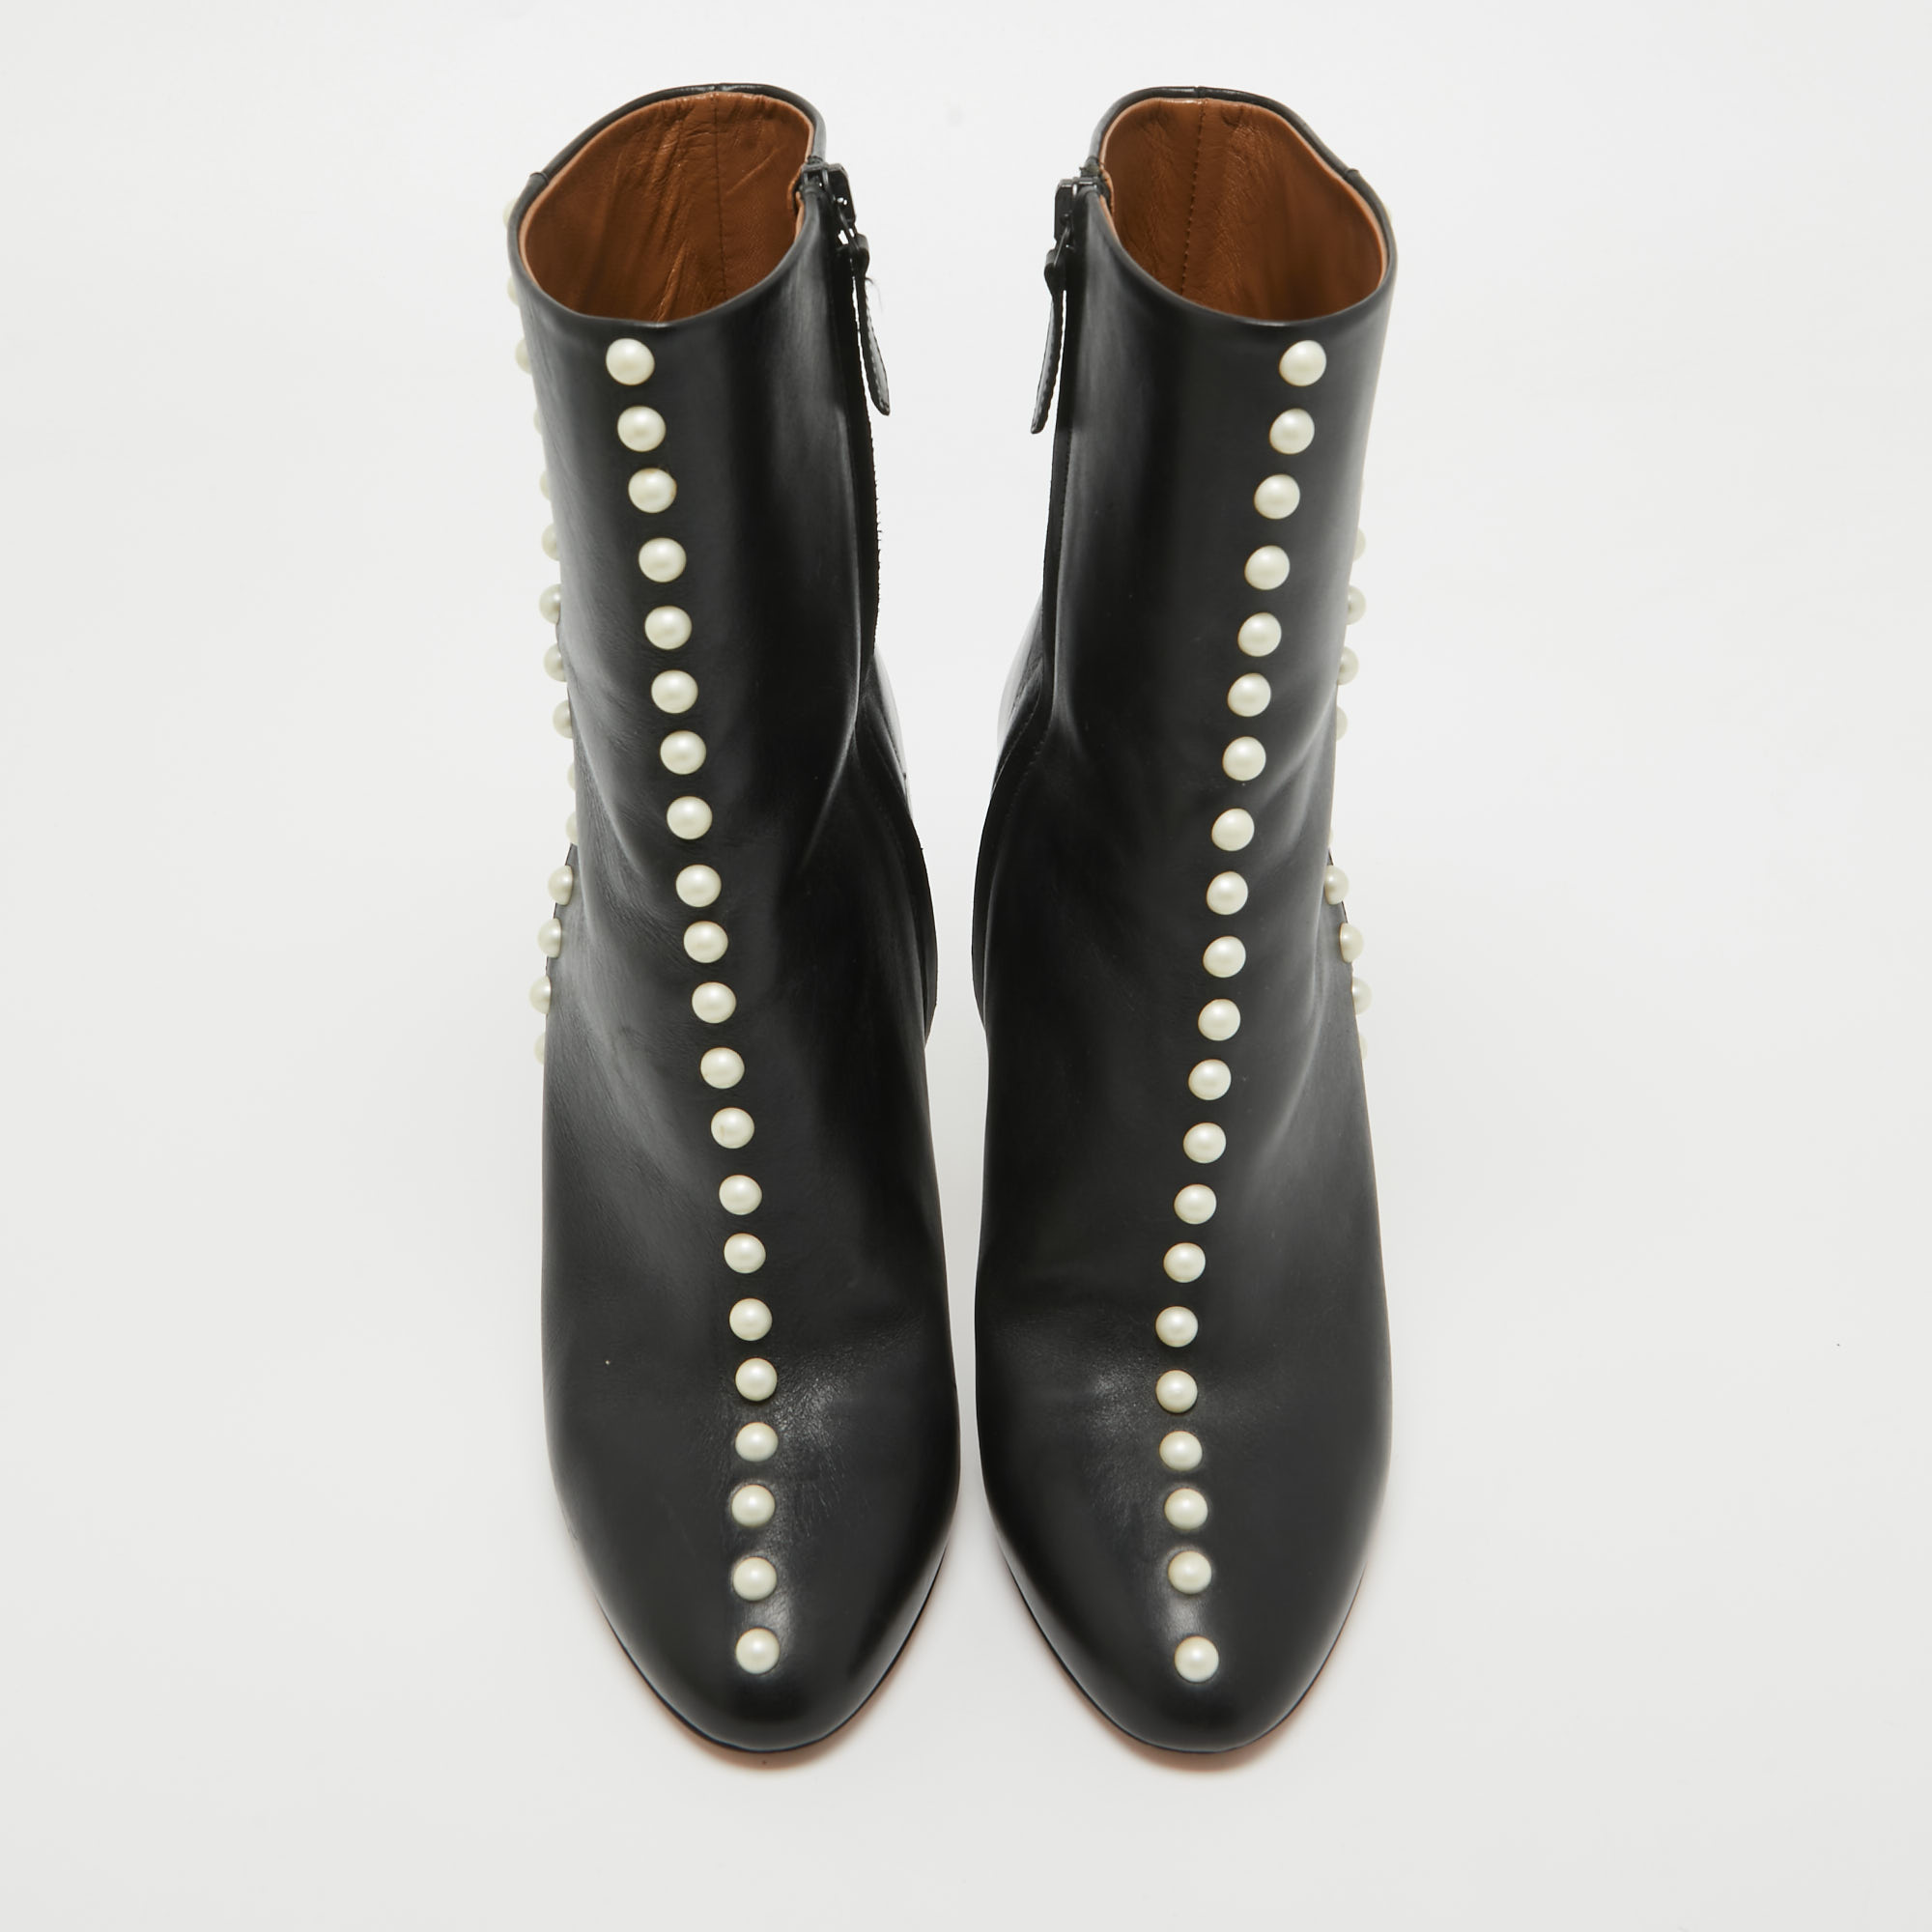 Aquazzura Black Leather Studded Follie Ankle Boots Size 38.5